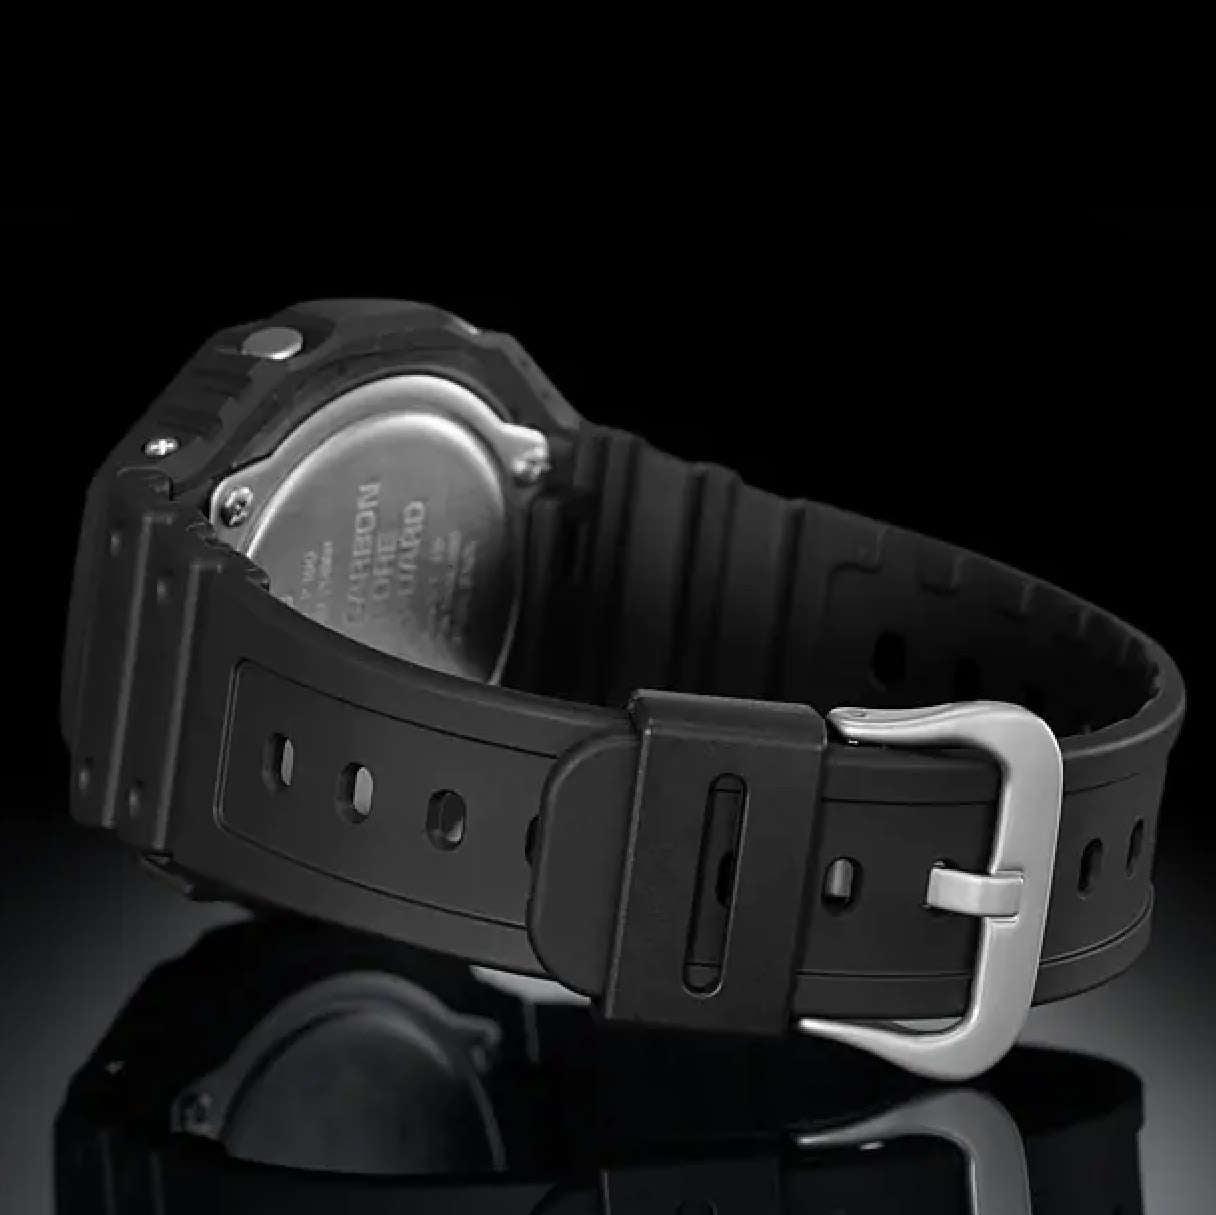 Casio G-Shock GA-2100-1A1ER Armbanduhr